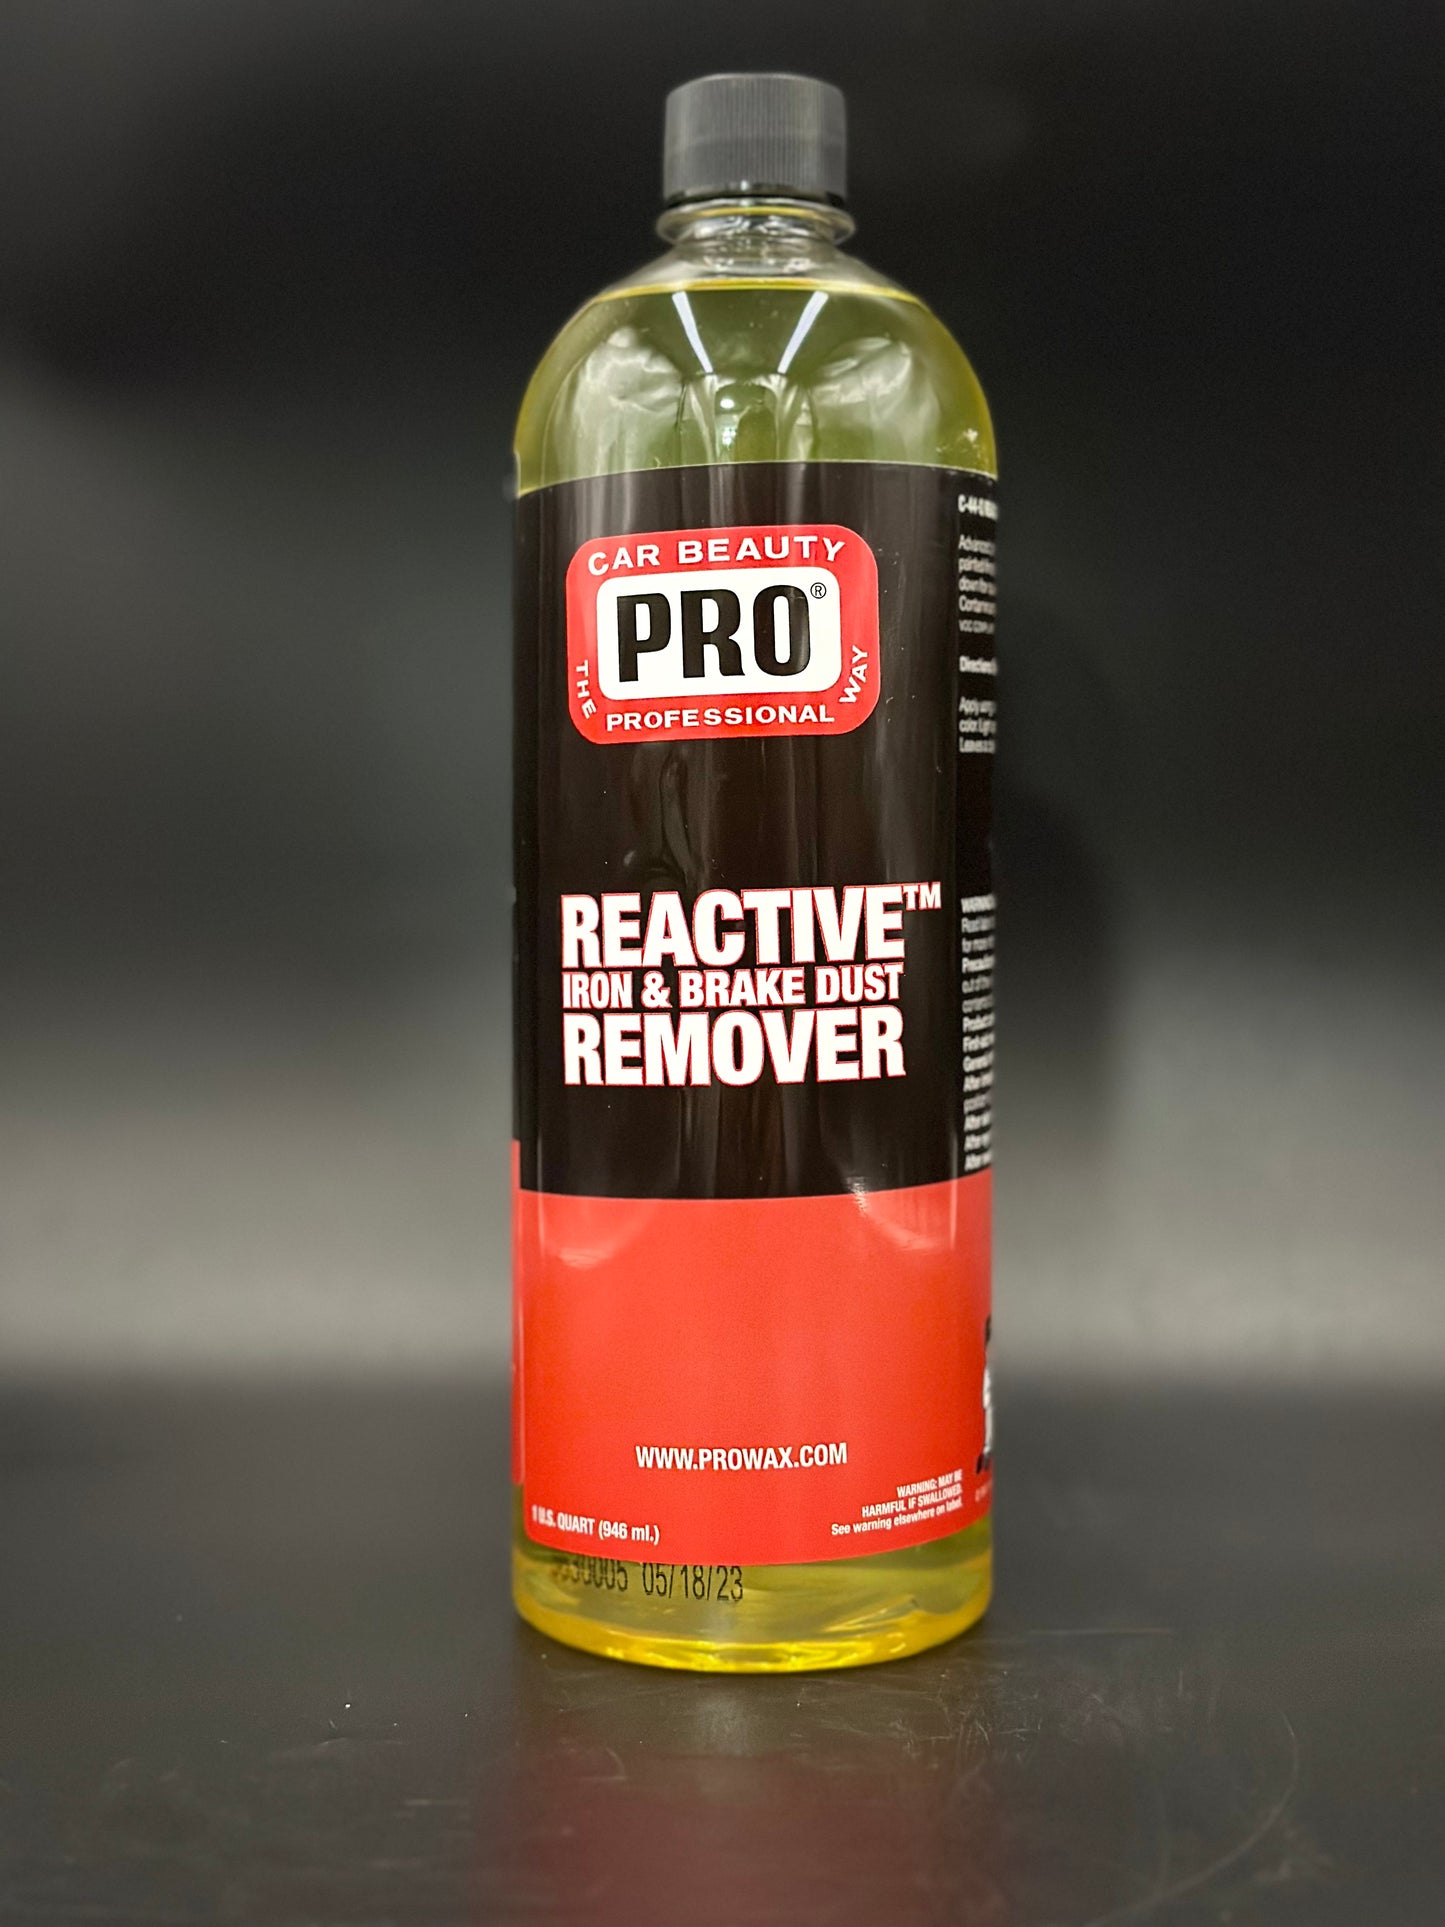 Pro - REACTIVE™ IRON & BRAKE DUST REMOVER - C44 – Complete Detail